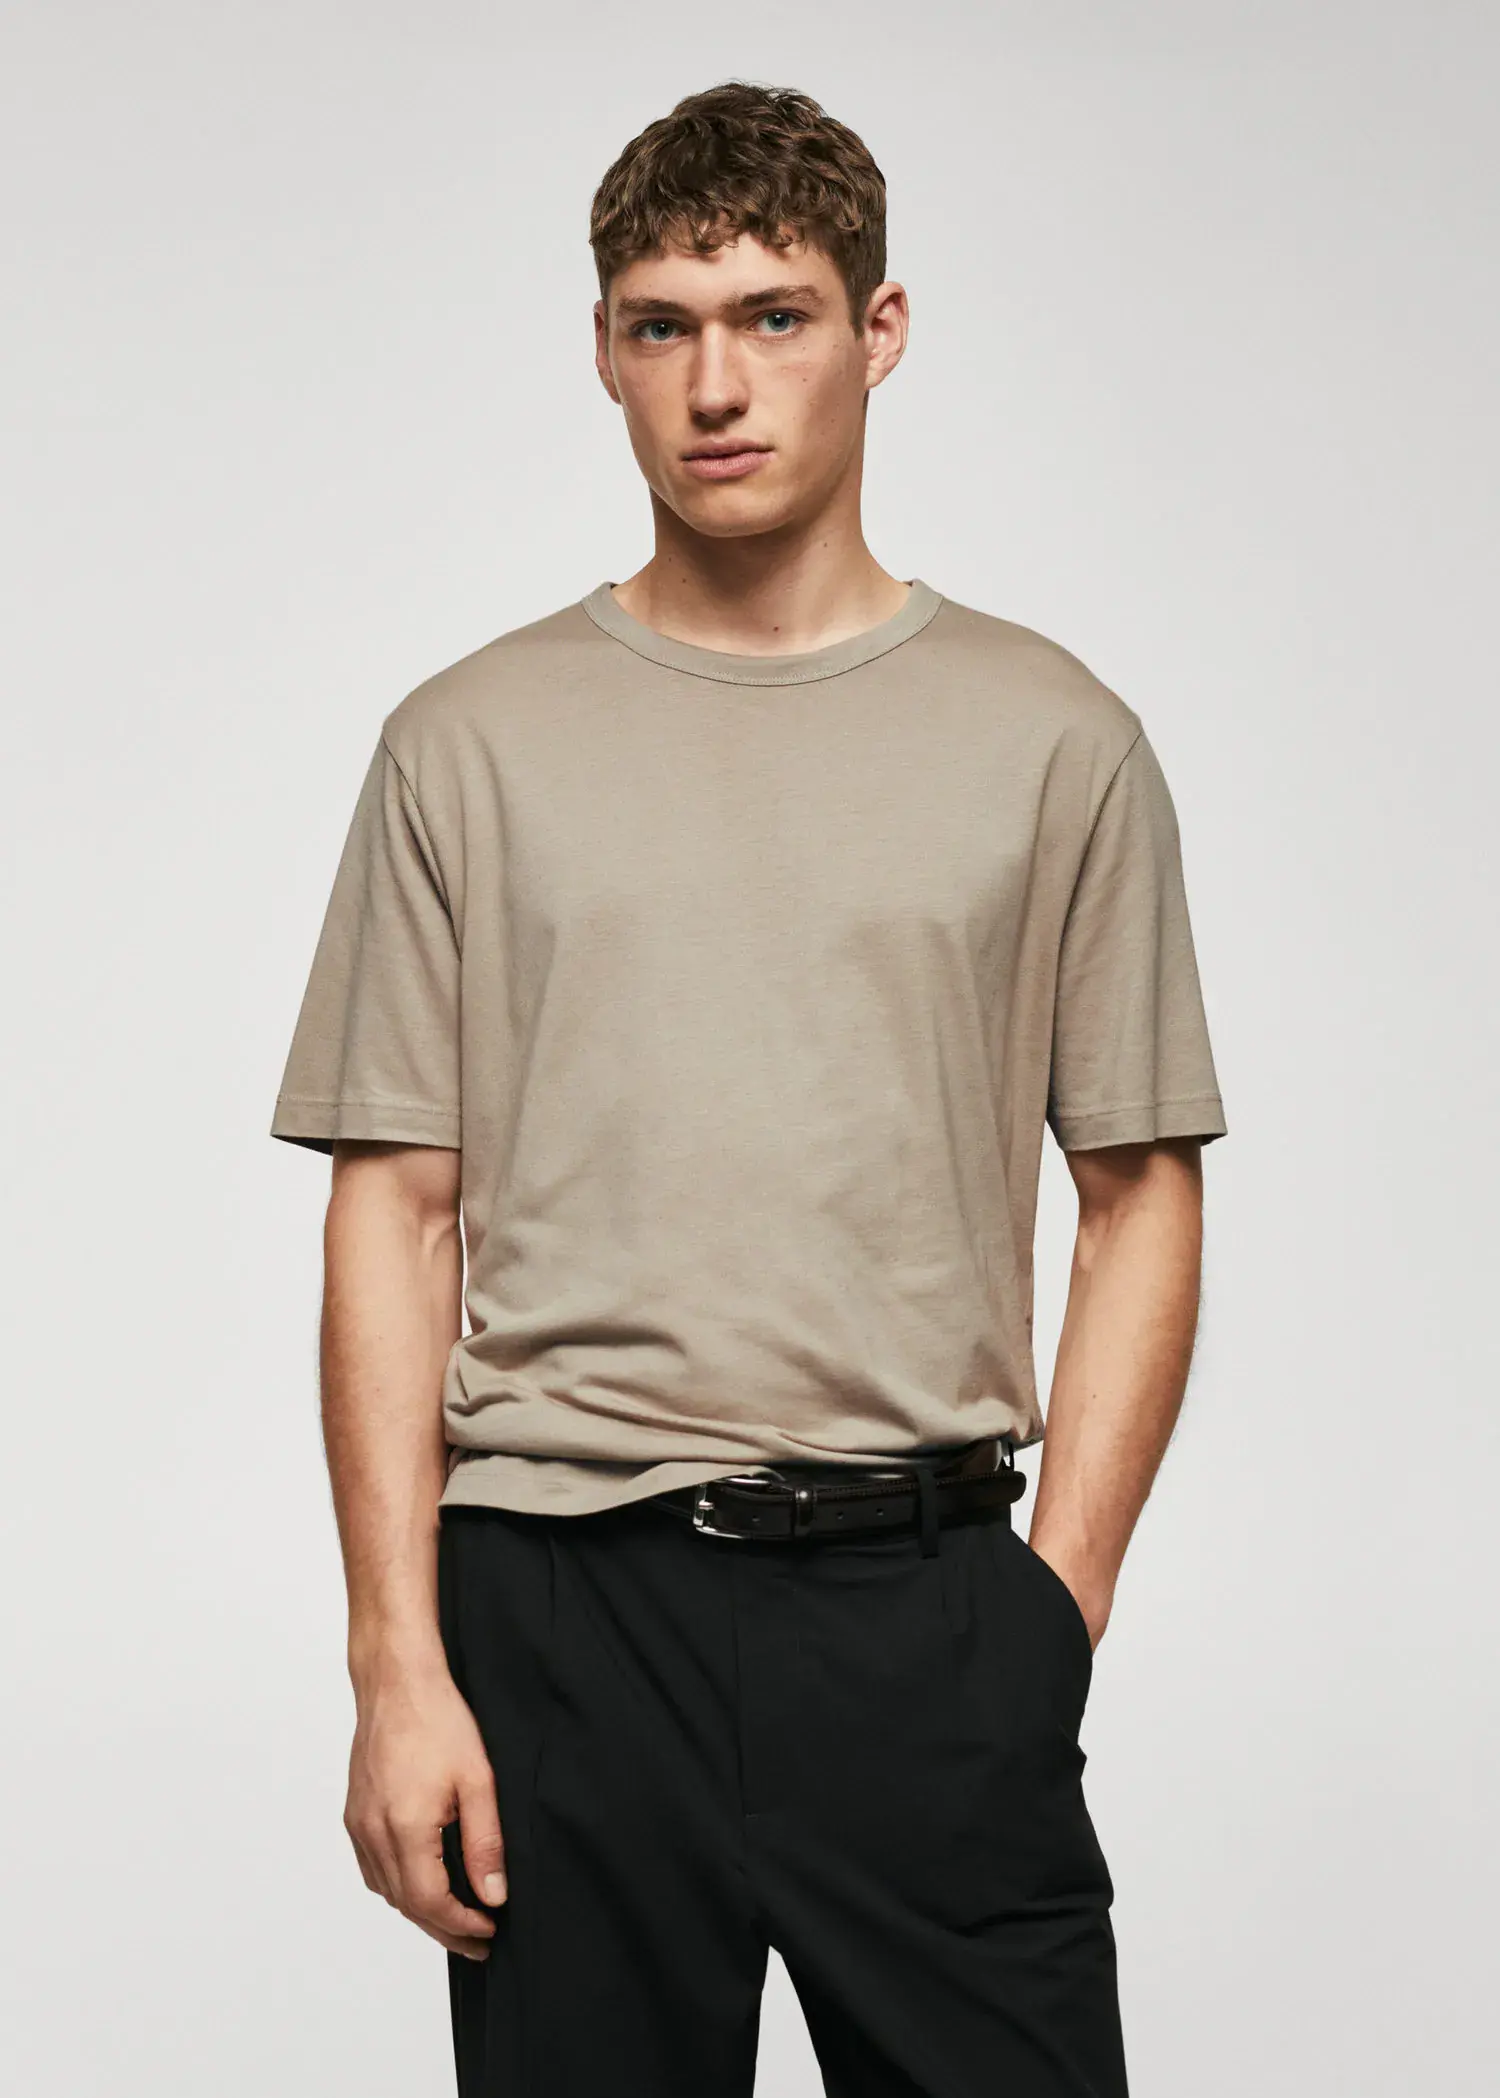 Mango Basic mercerized lightweight shirt. a young man wearing a tan t-shirt and black pants. 